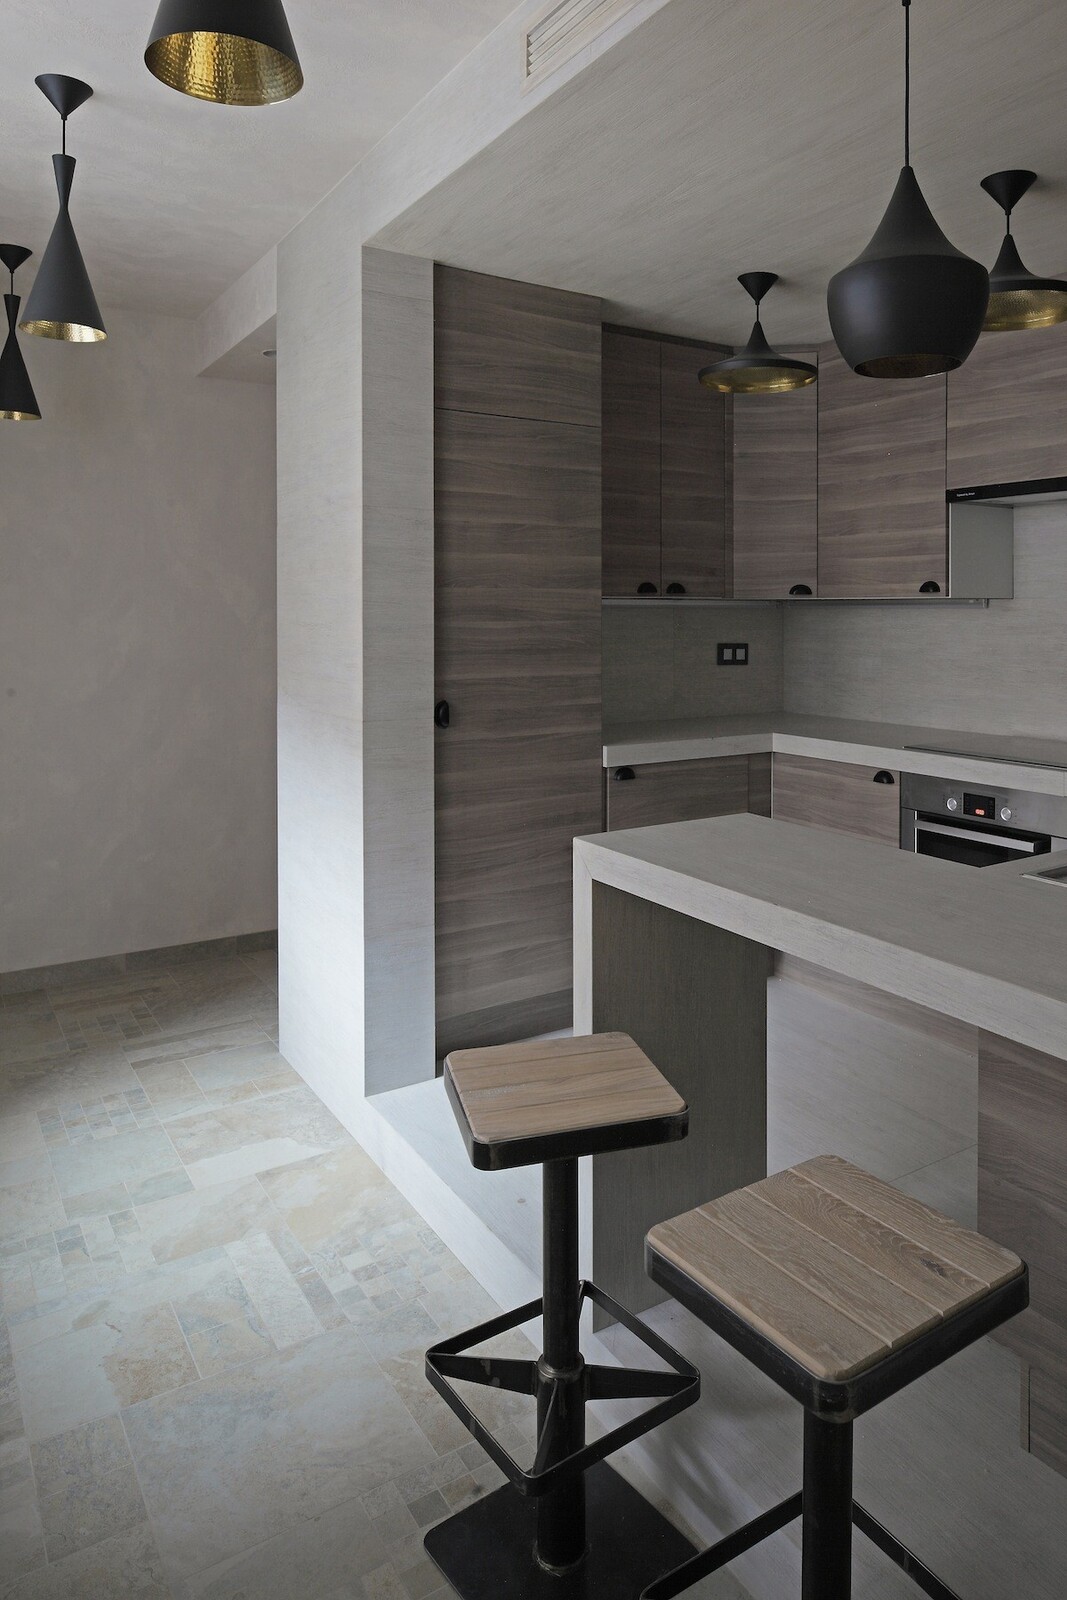 Peter-Kostelov-Smolenka-Oak-Tube-Apartment-kitchen.jpg